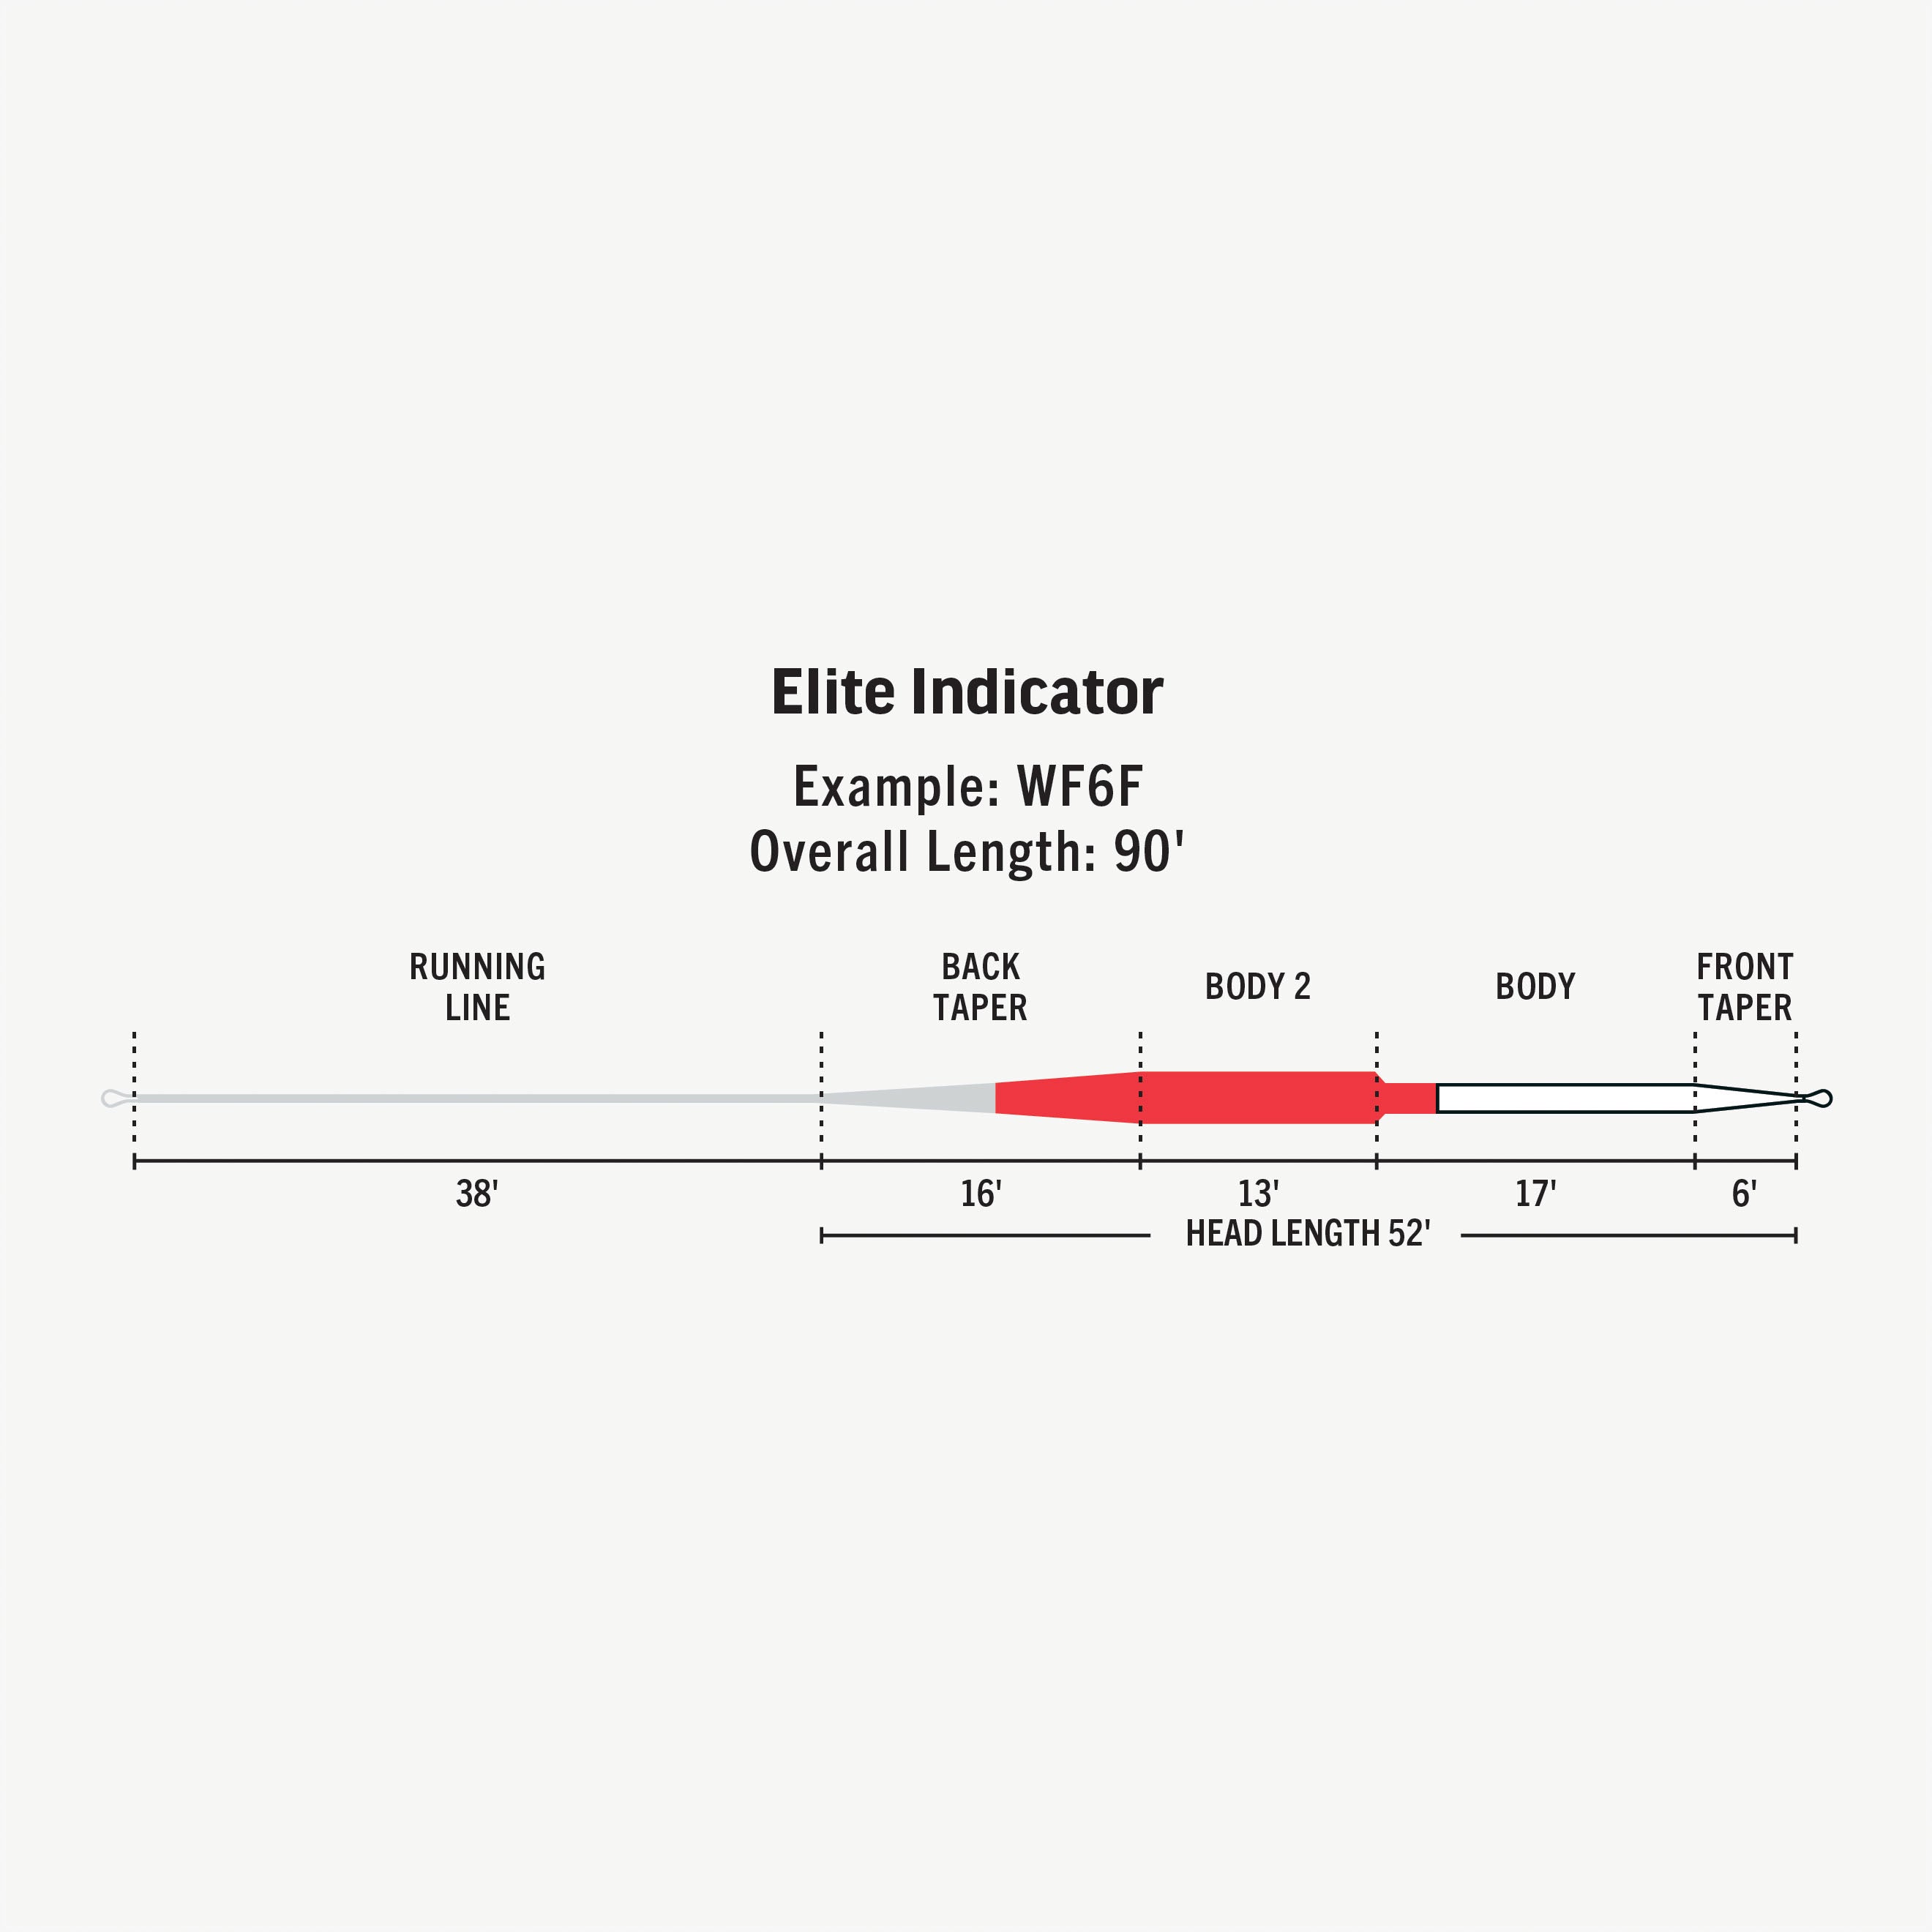 Elite Indicator - ( RIO PRODUCTS)